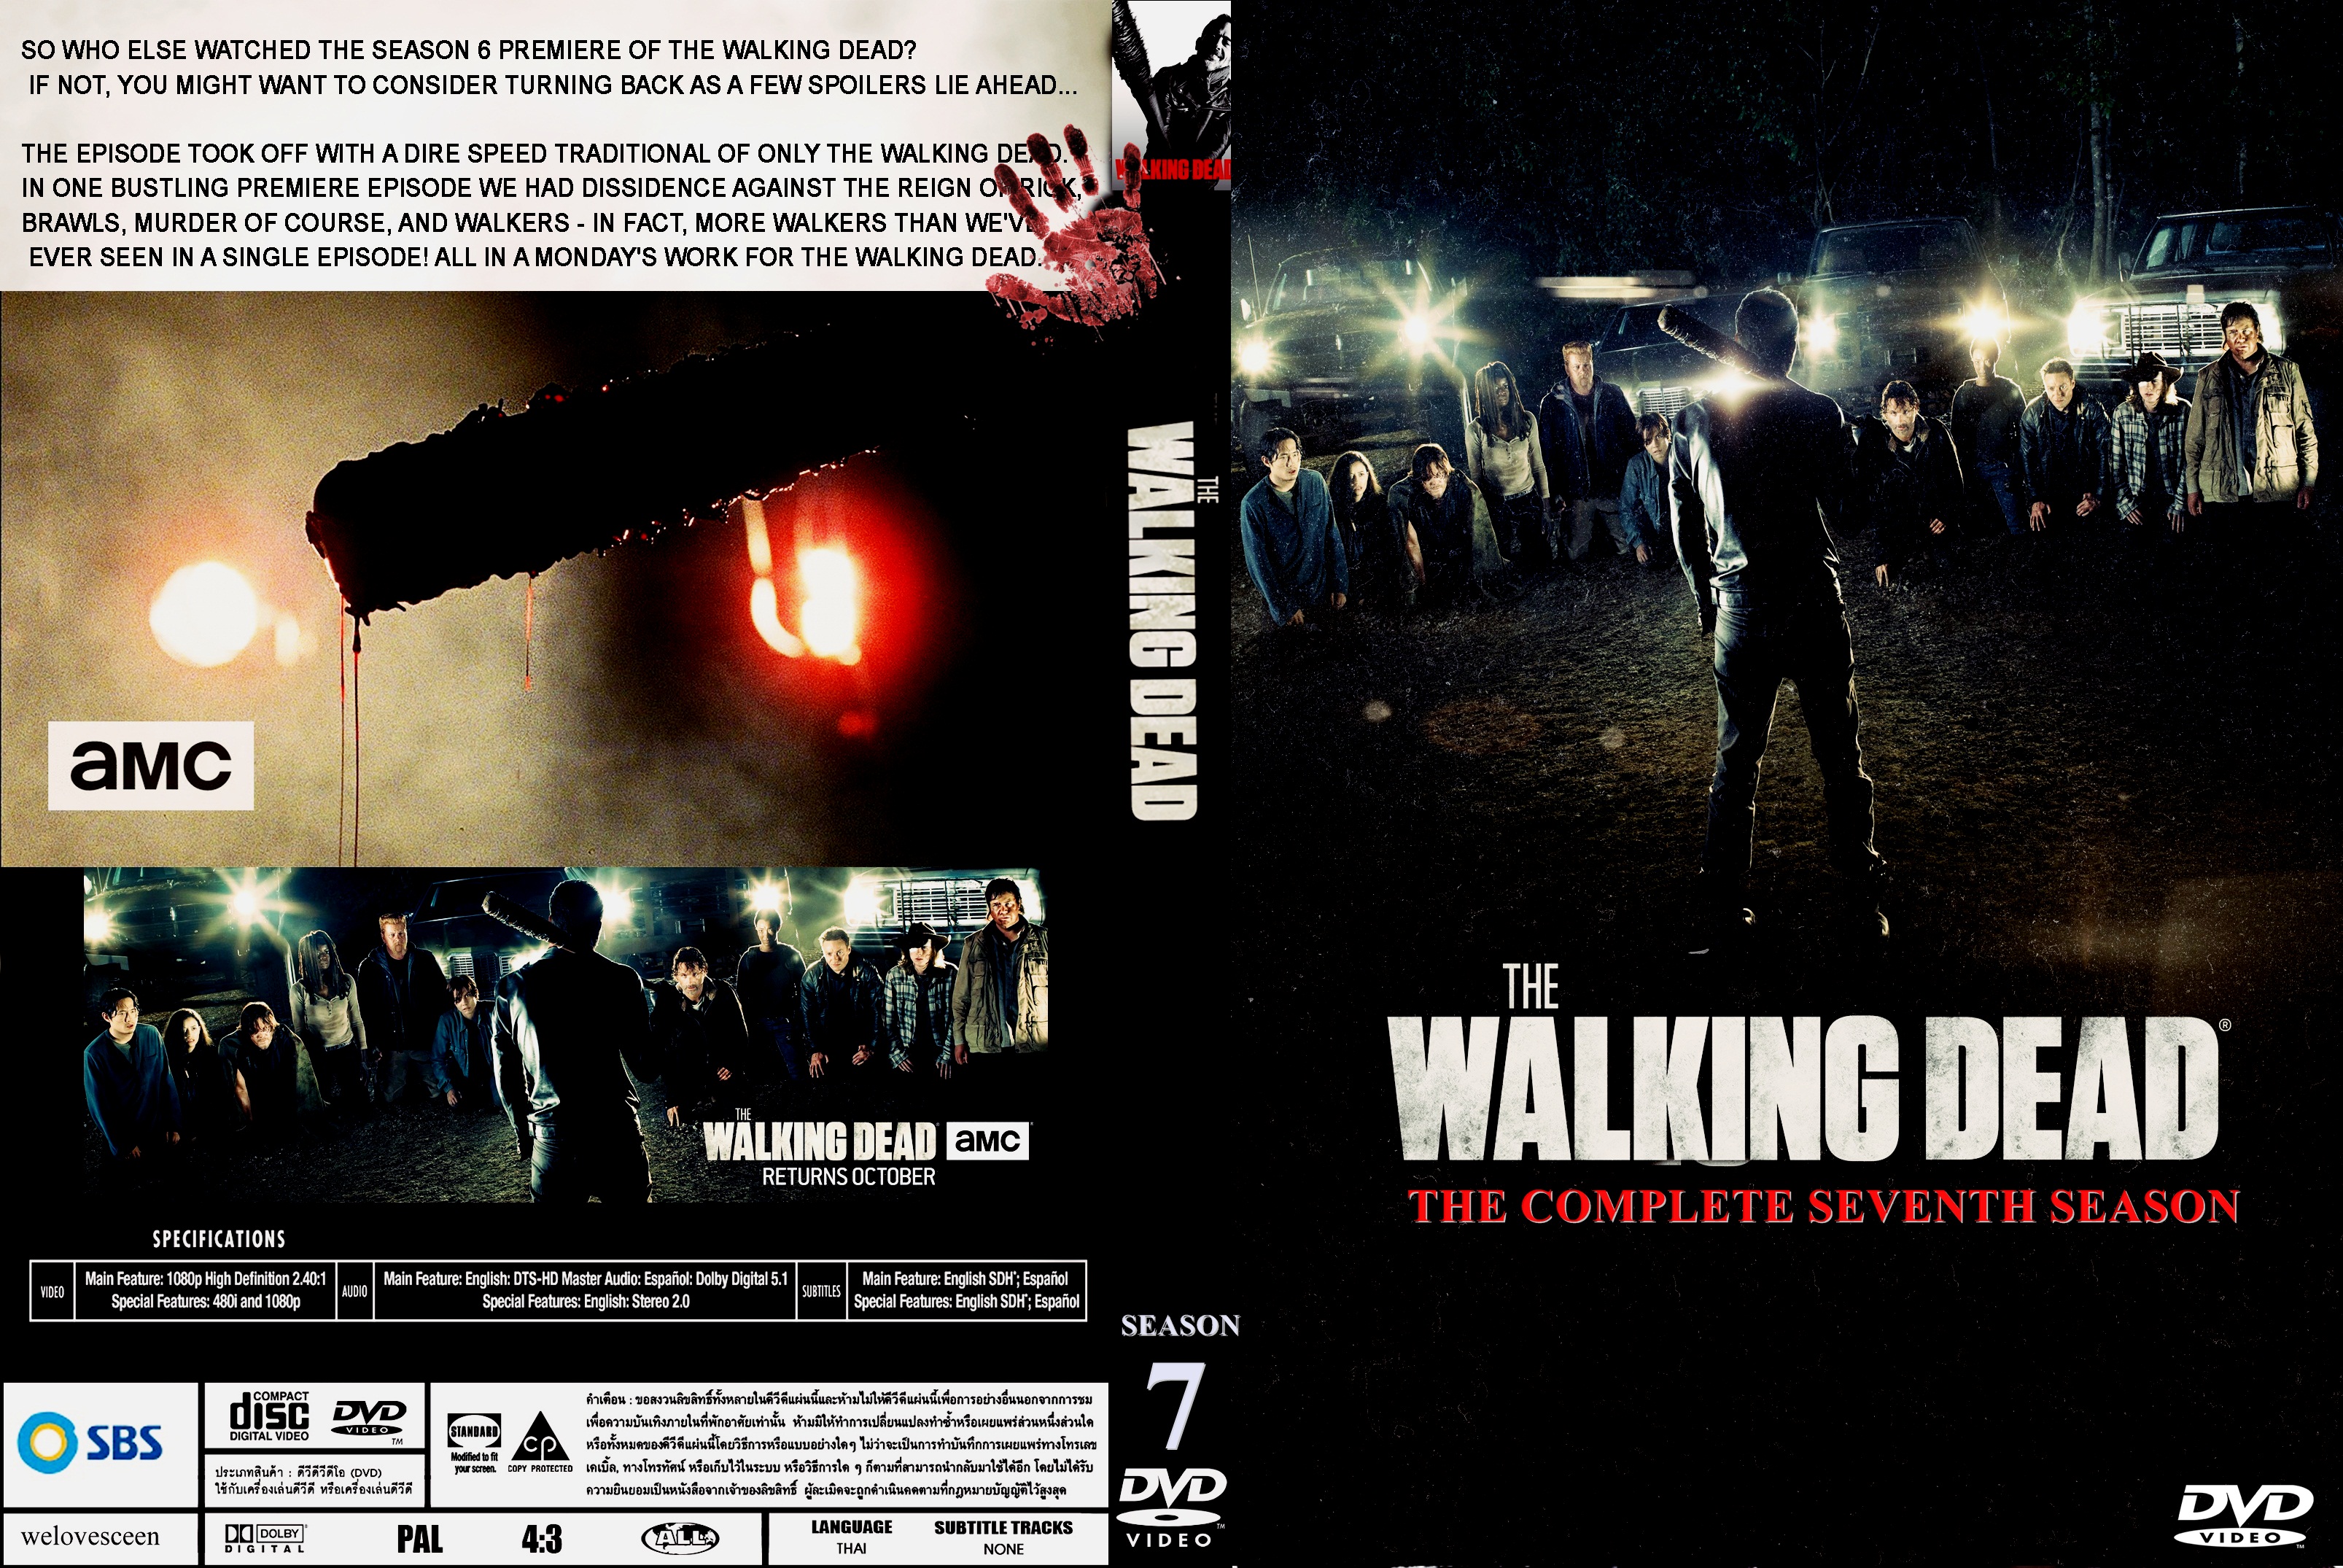 Stiahni si Seriál Zivi mrtvi / The Walking Dead S07E13 - Bury Me Here [TvRip][720p]